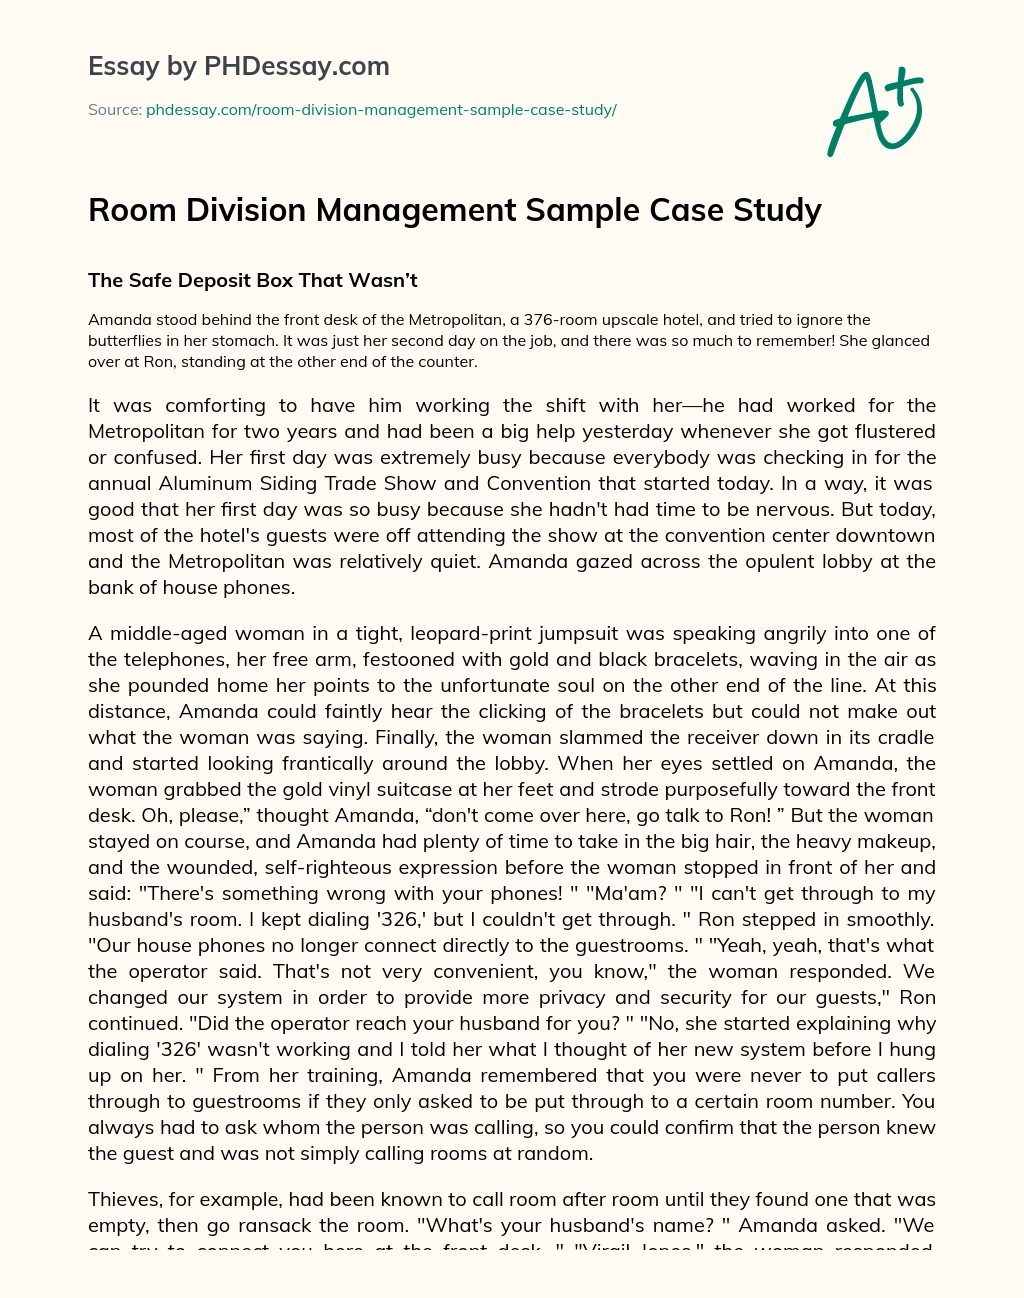 Room Division Management Sample Case Study essay